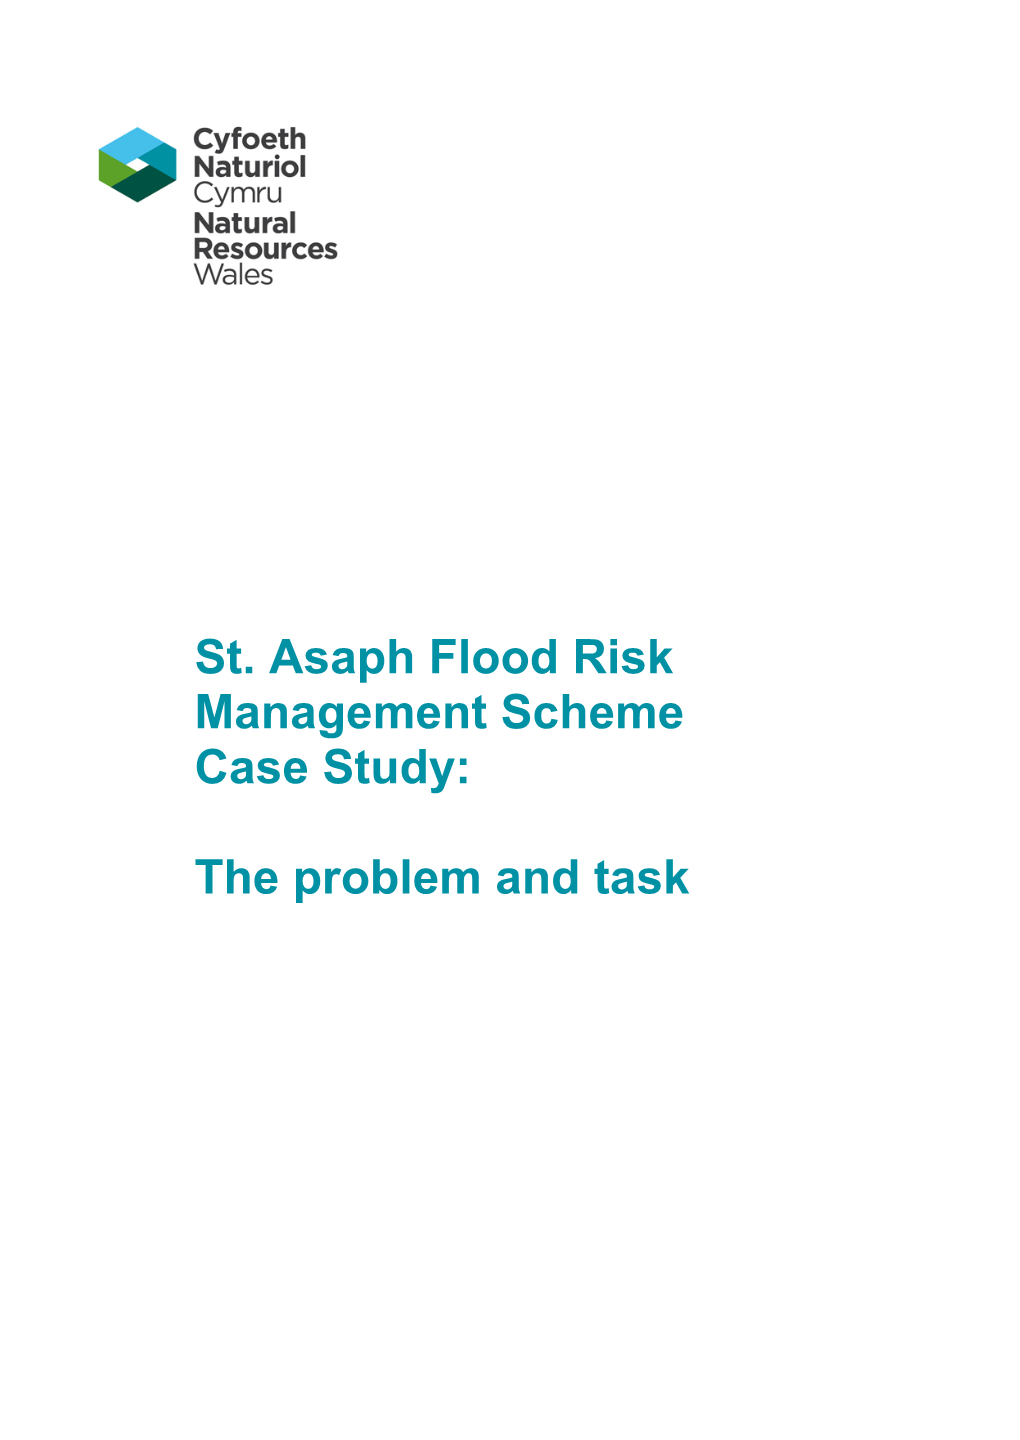 St. Asaph Flood Risk Management Scheme Case Study